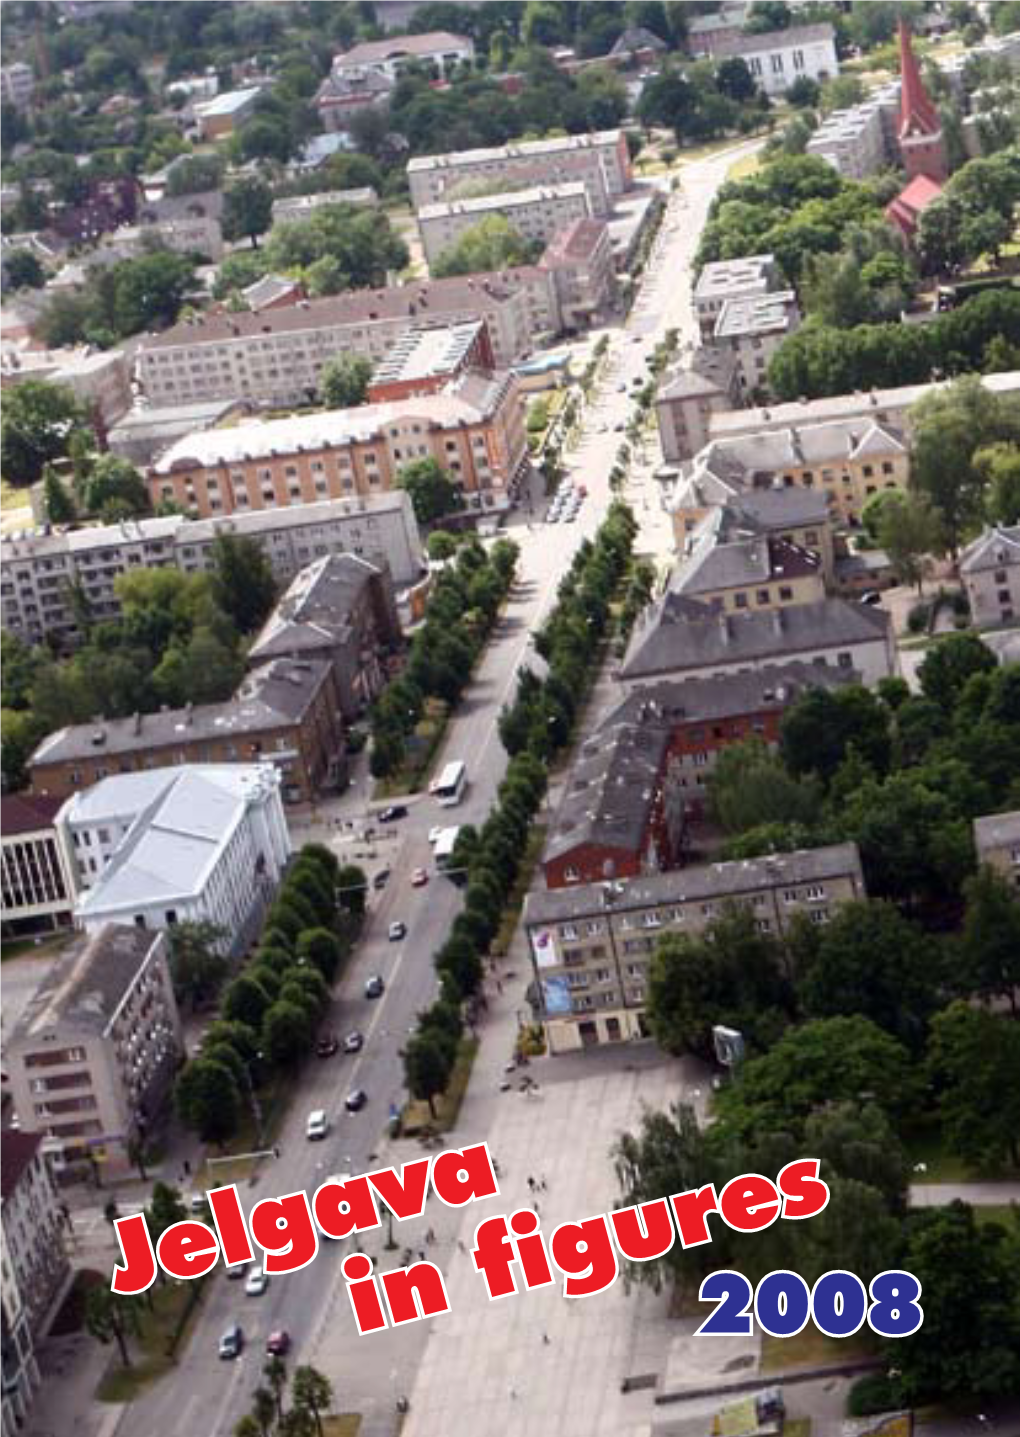 Jelgava in Figures for 2008